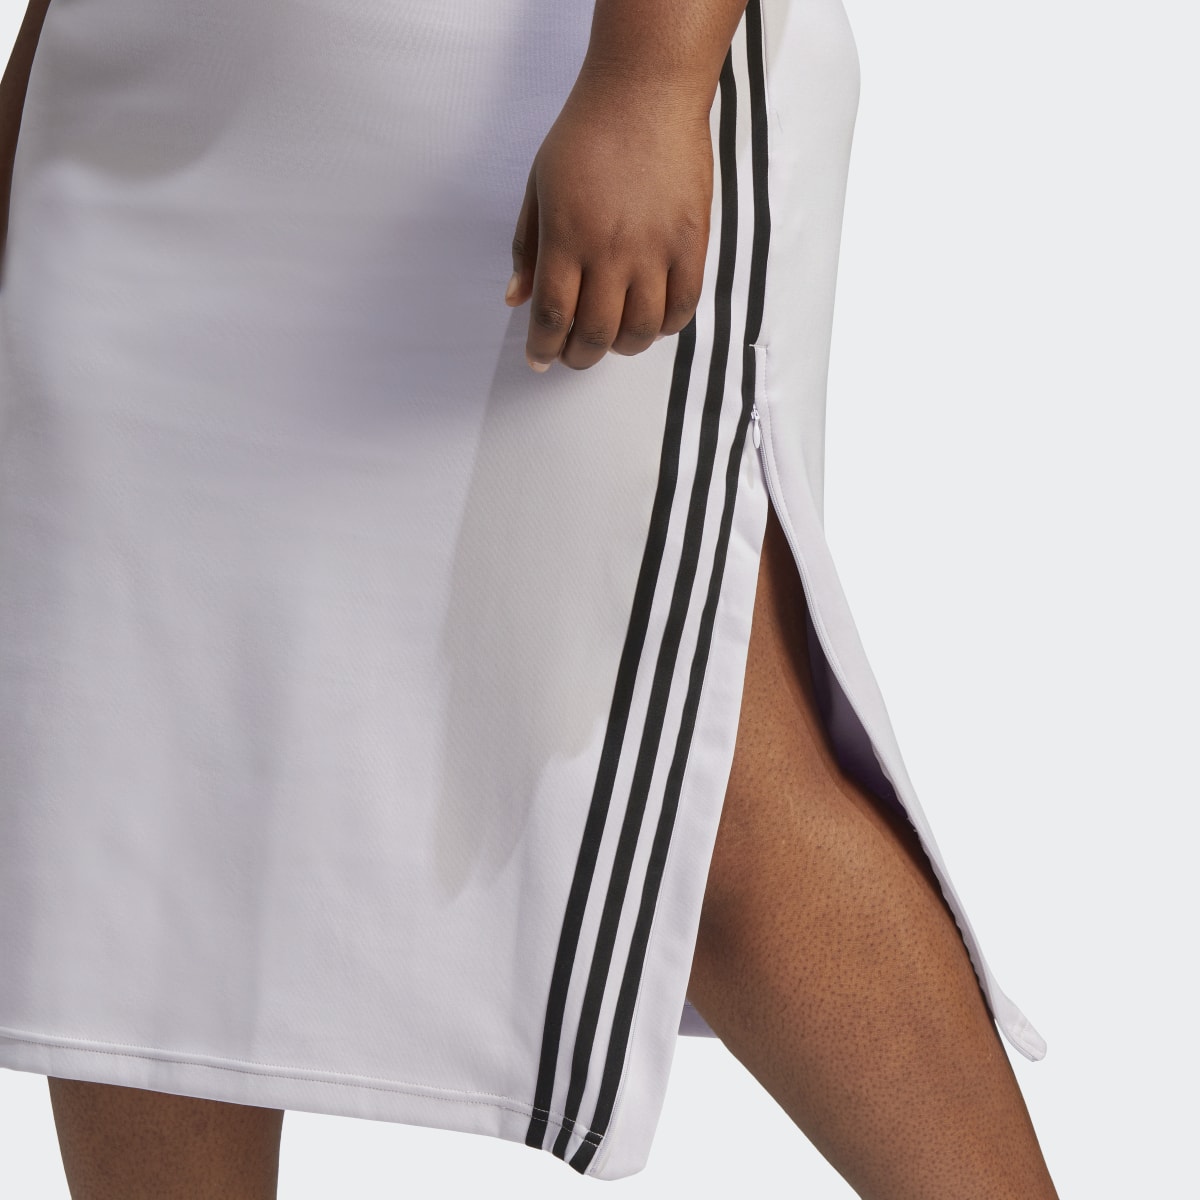 Adidas Always Original Long Skirt (Plus Size). 6